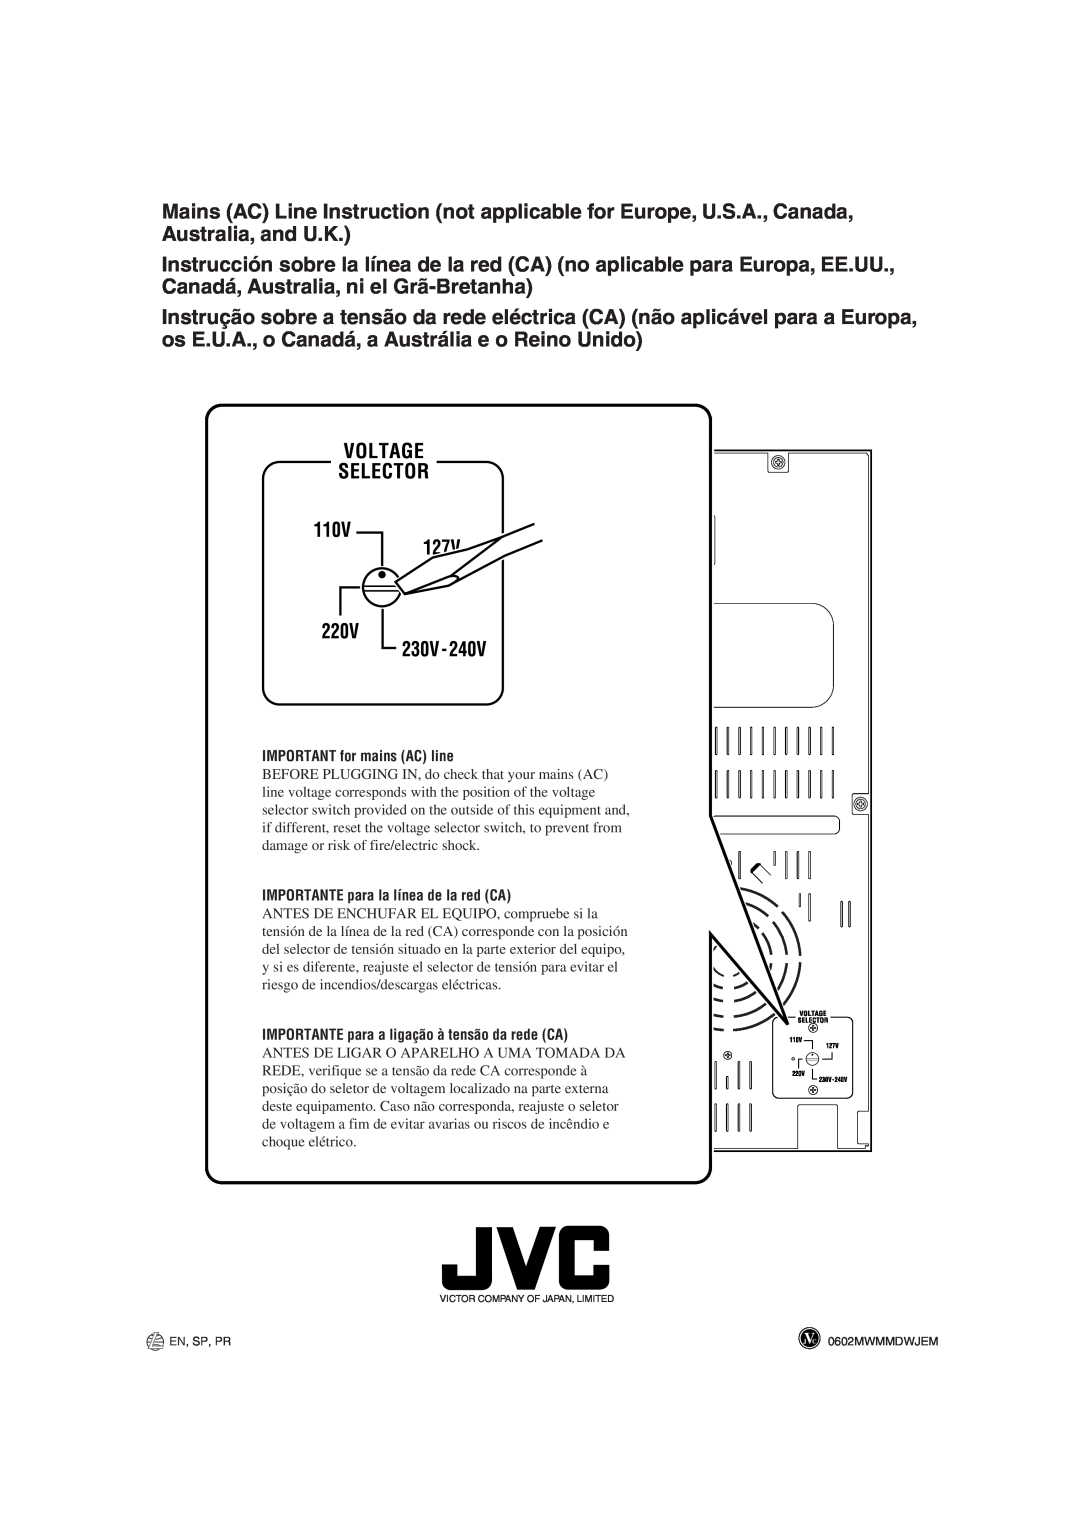 JVC CA-HXZ3 manual IMPORTANT for mains AC line, IMPORTANTE para la línea de la red CA, En, Sp, Pr, 0602MWMMDWJEM 